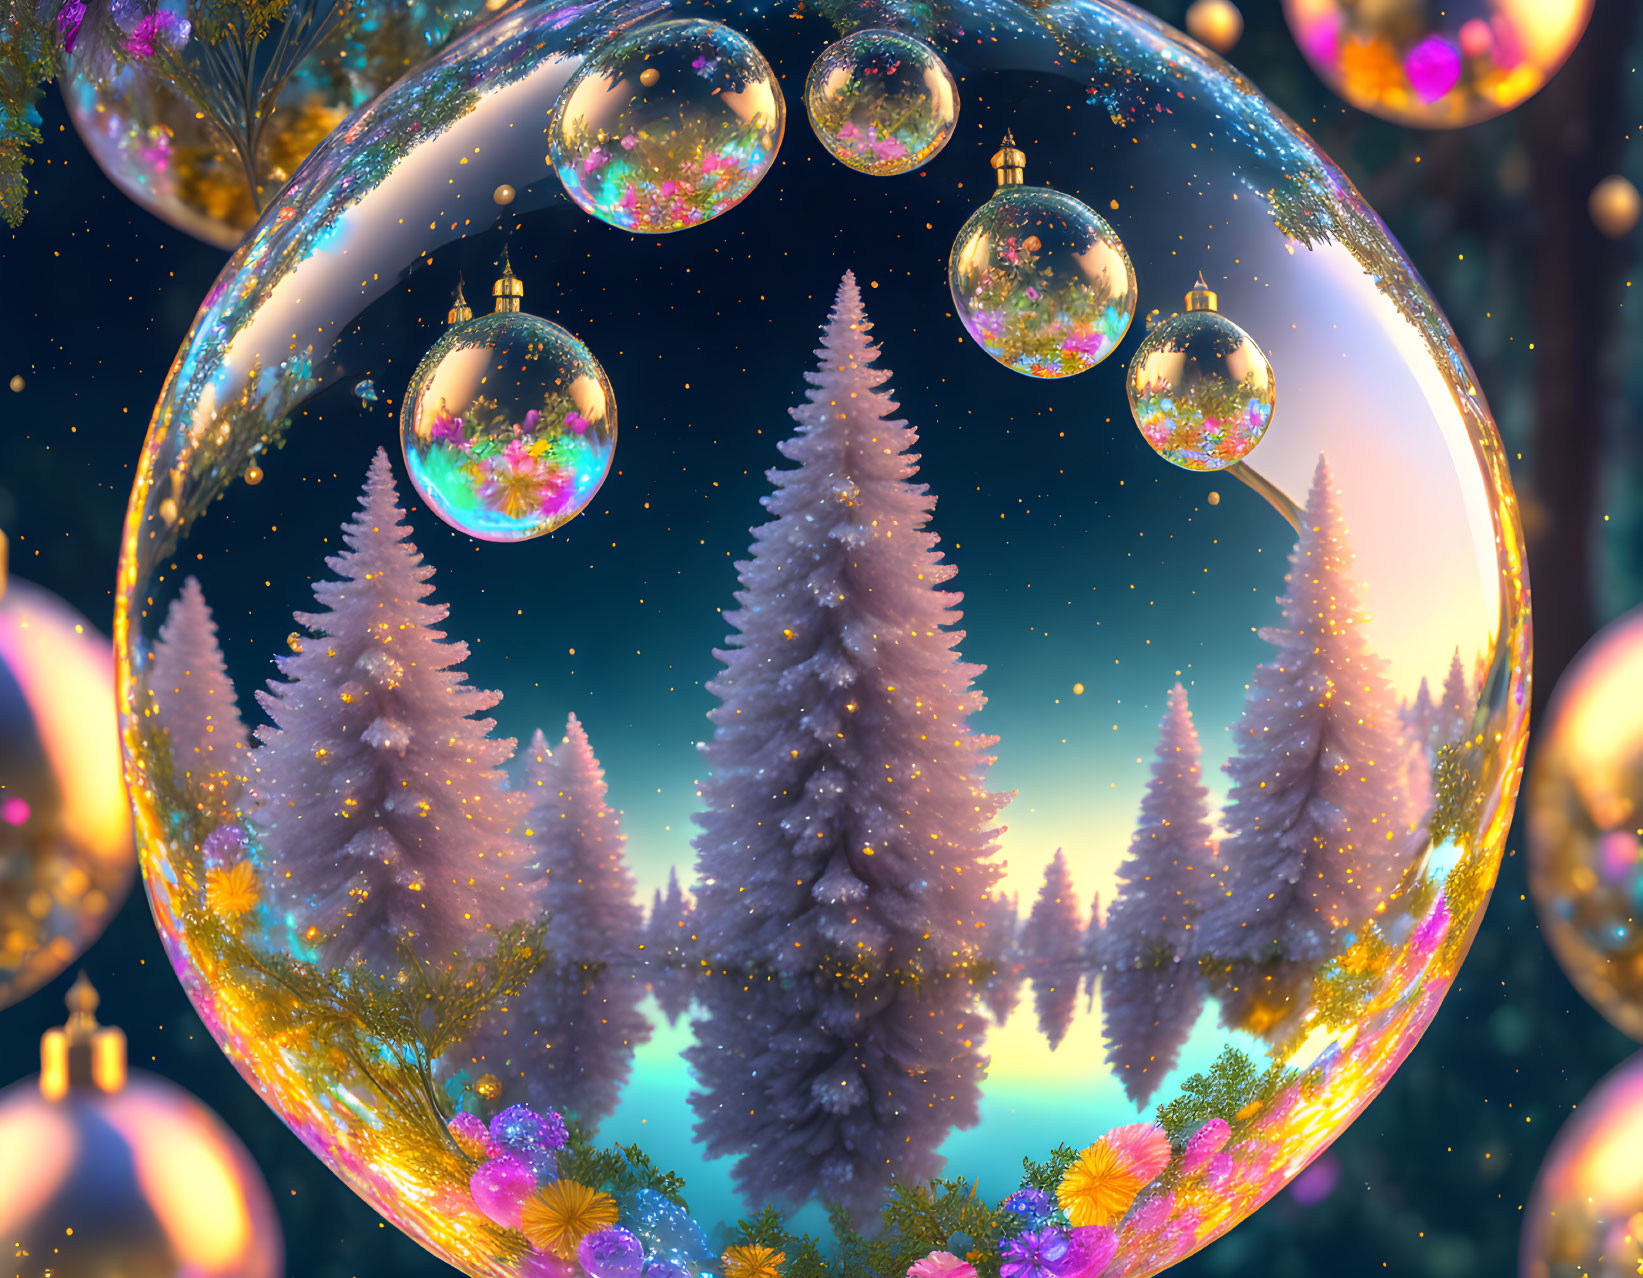 Christmas Scene: Sparkling Trees in Ornaments Reflecting Winter Wonderland